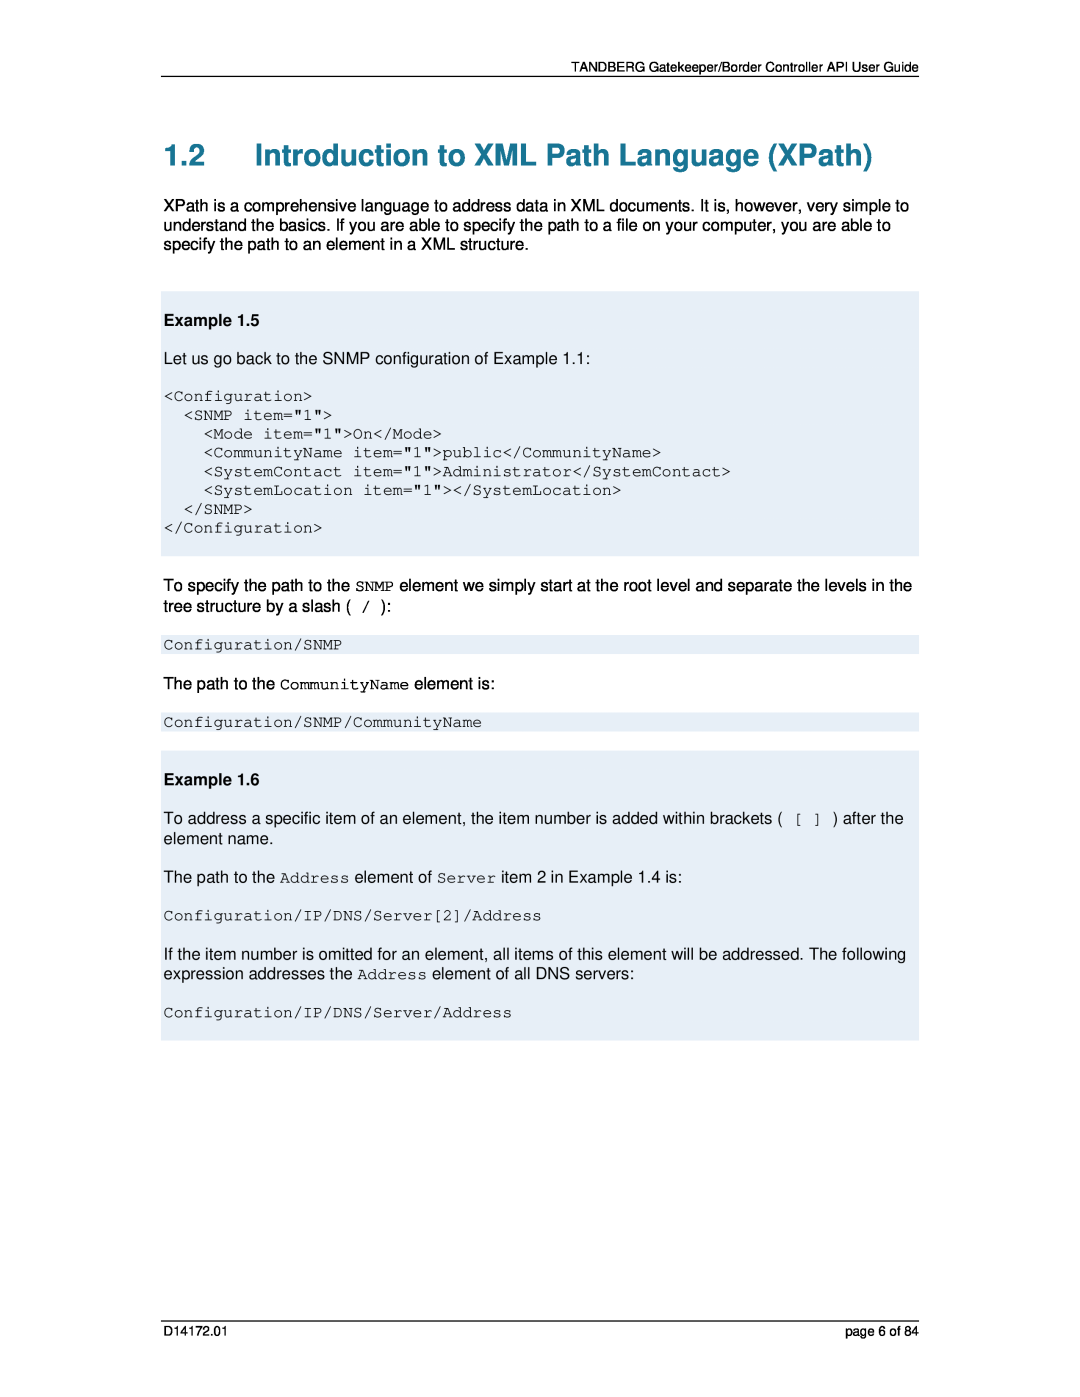 TANDBERG D14172.01 manual Introduction to XML Path Language XPath, Example 